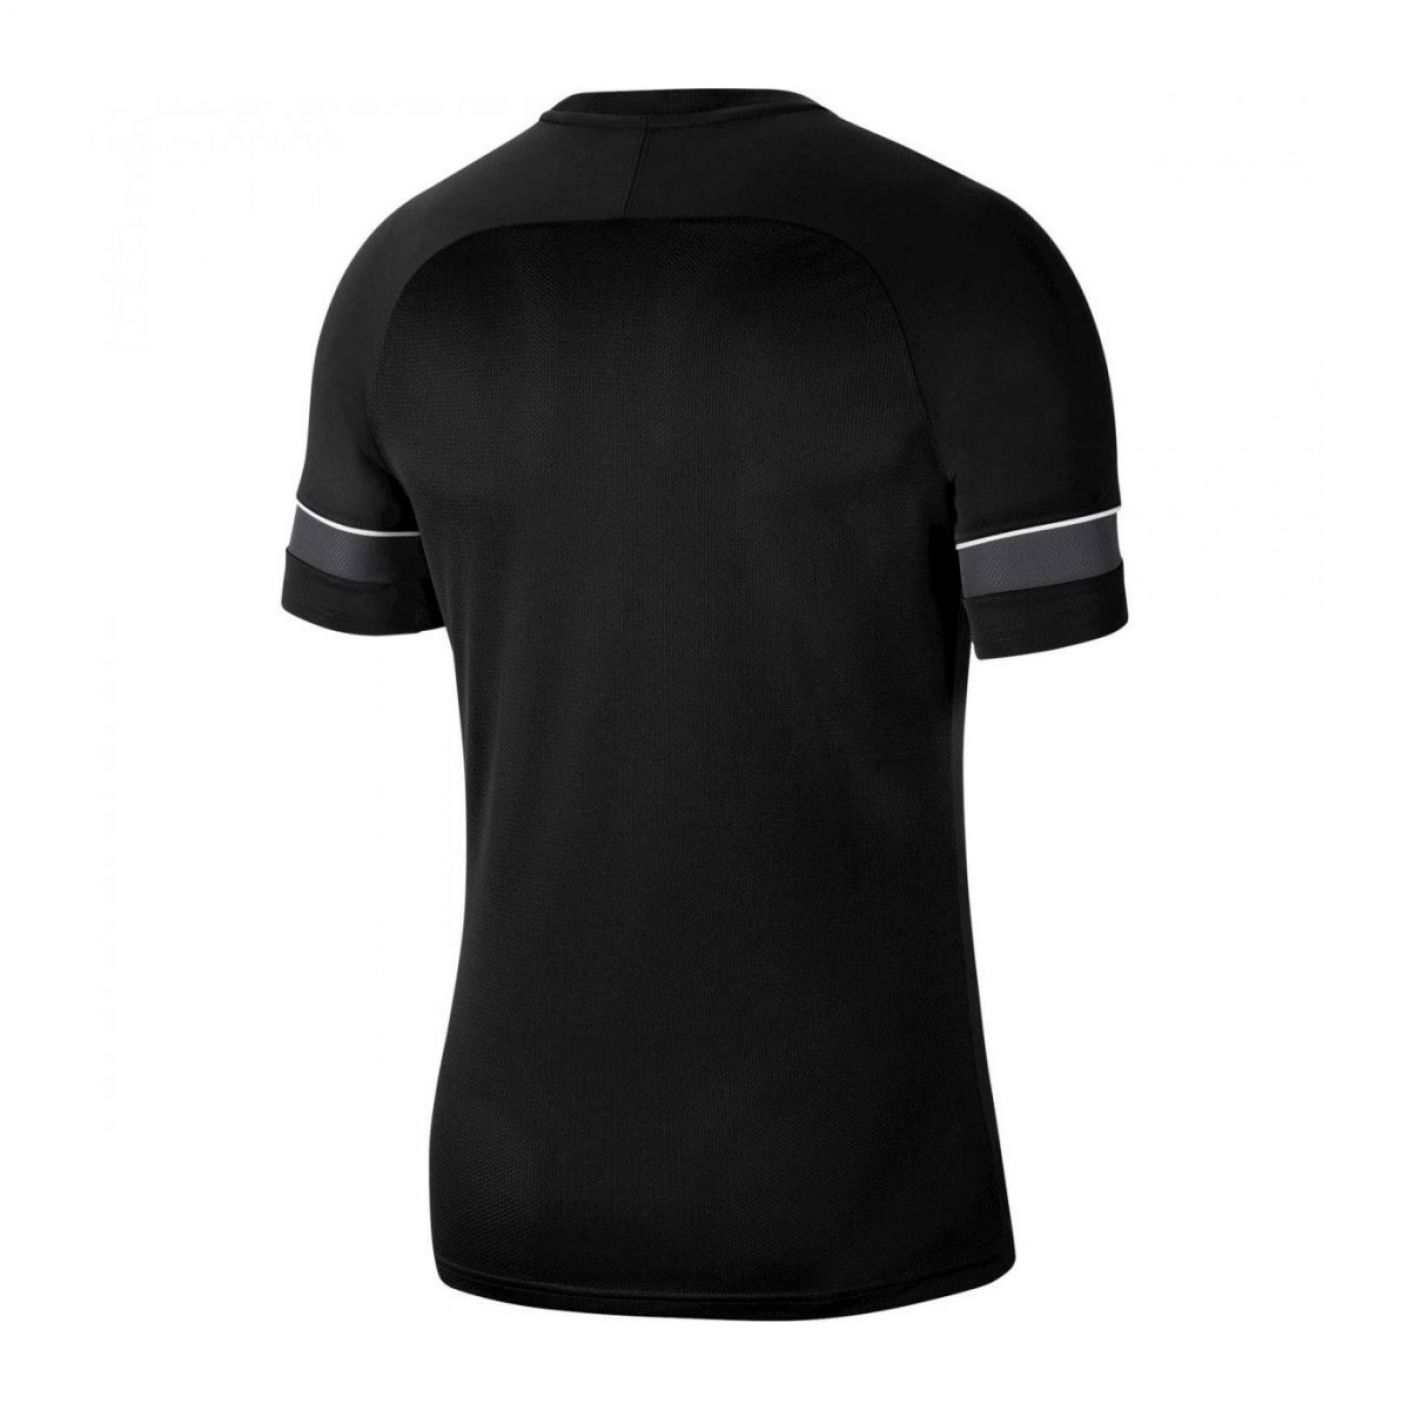 Nike Men's Black-Gray Dri-FIT Academy T-shirt